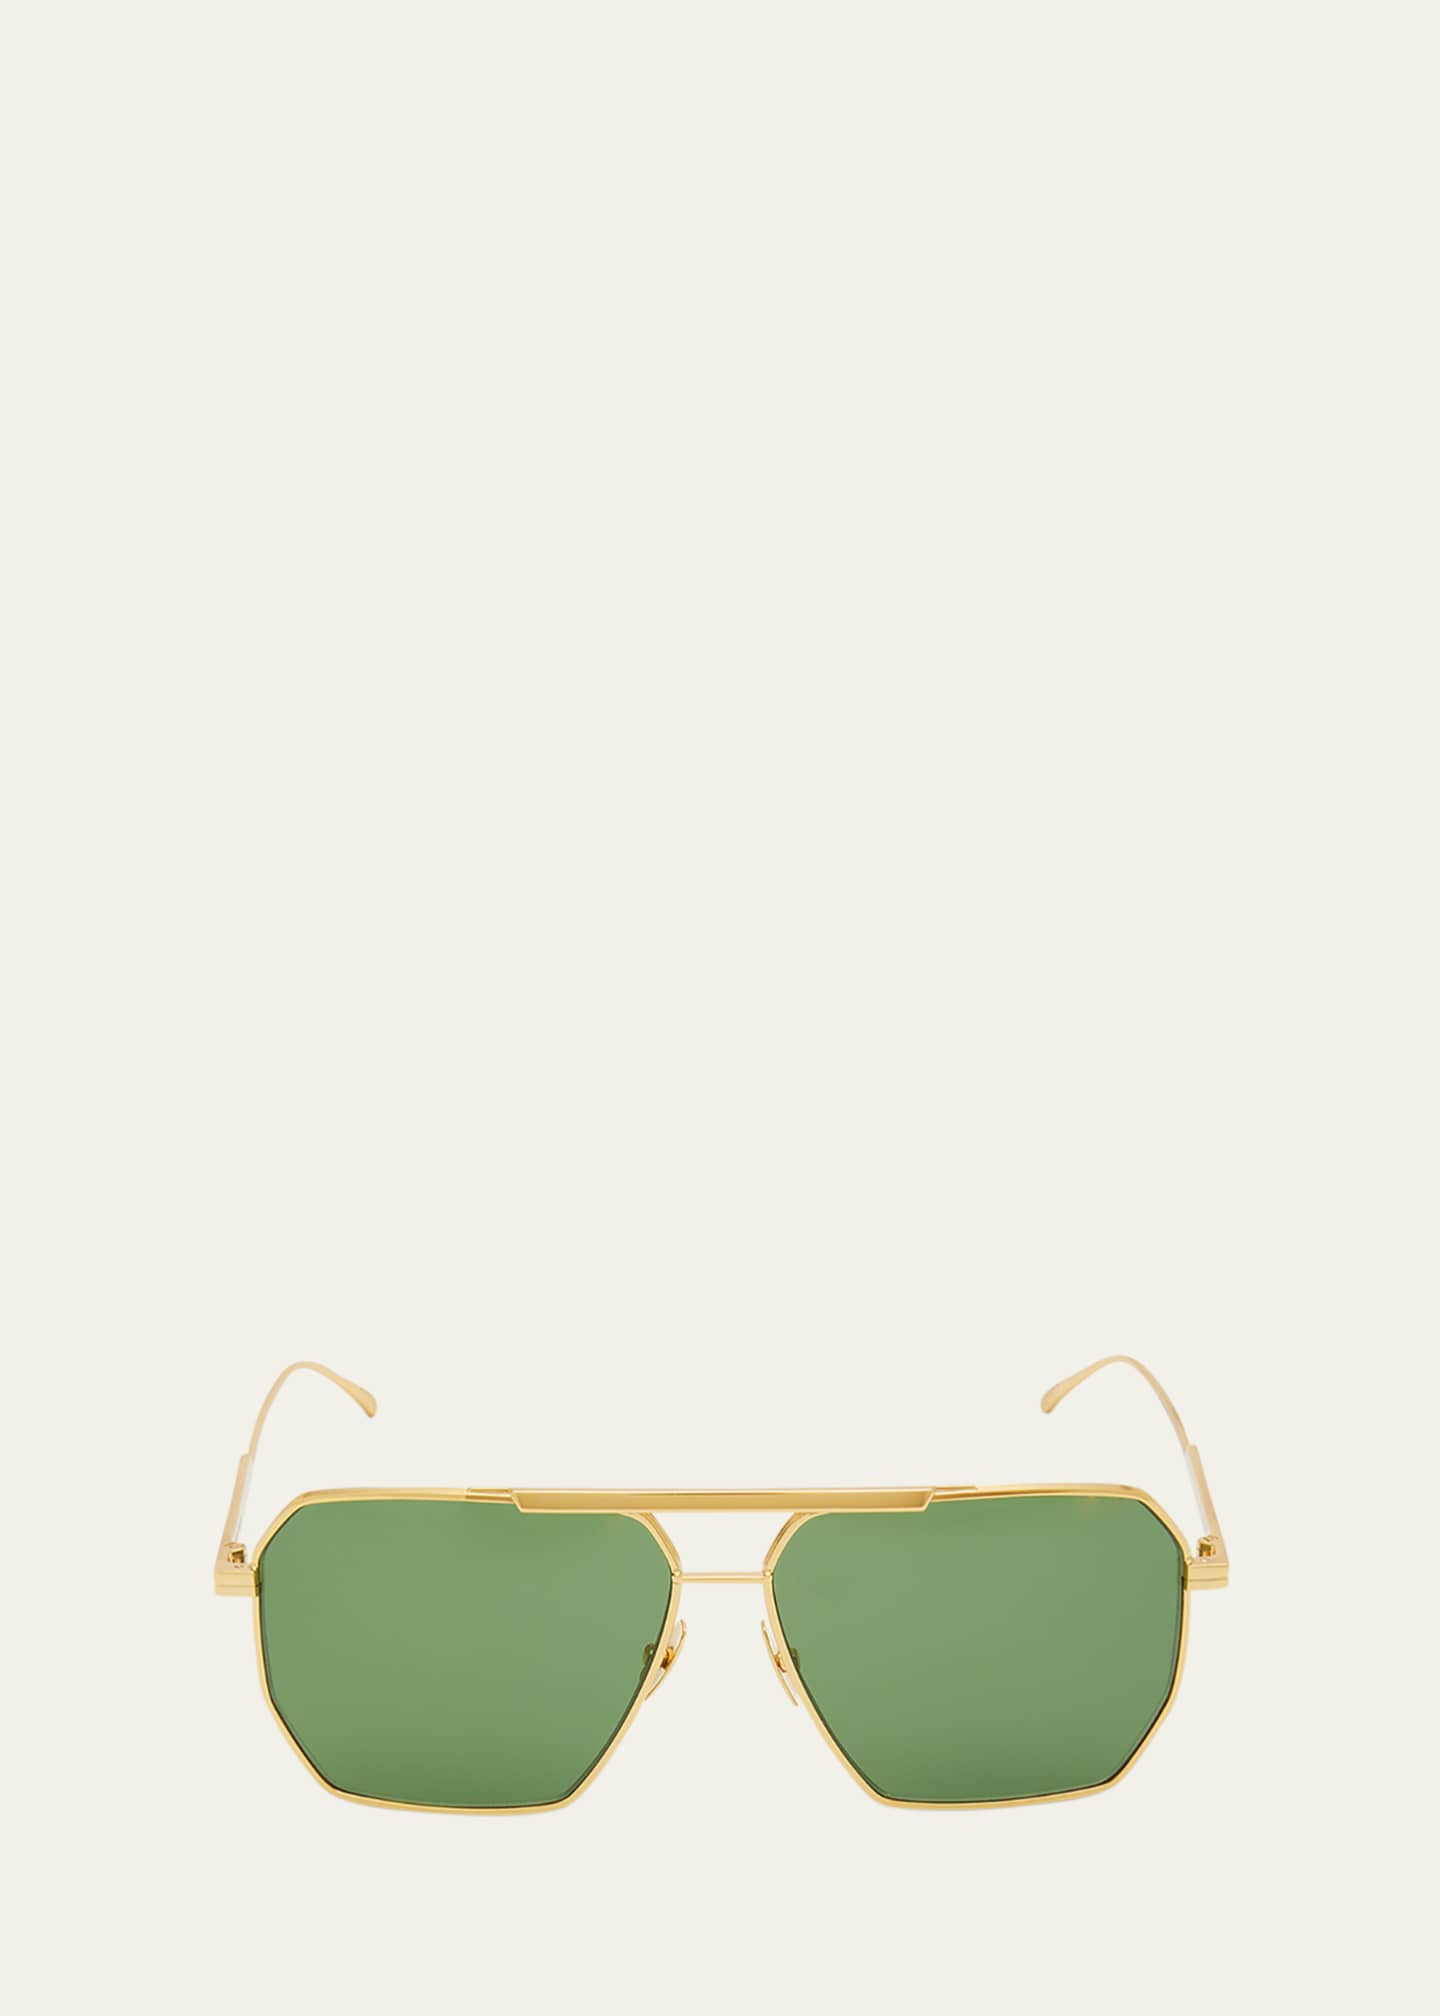 Oversized square gold aviator sunglasses Bottega Veneta BV 1012 col.004  green lenses, Occhiali